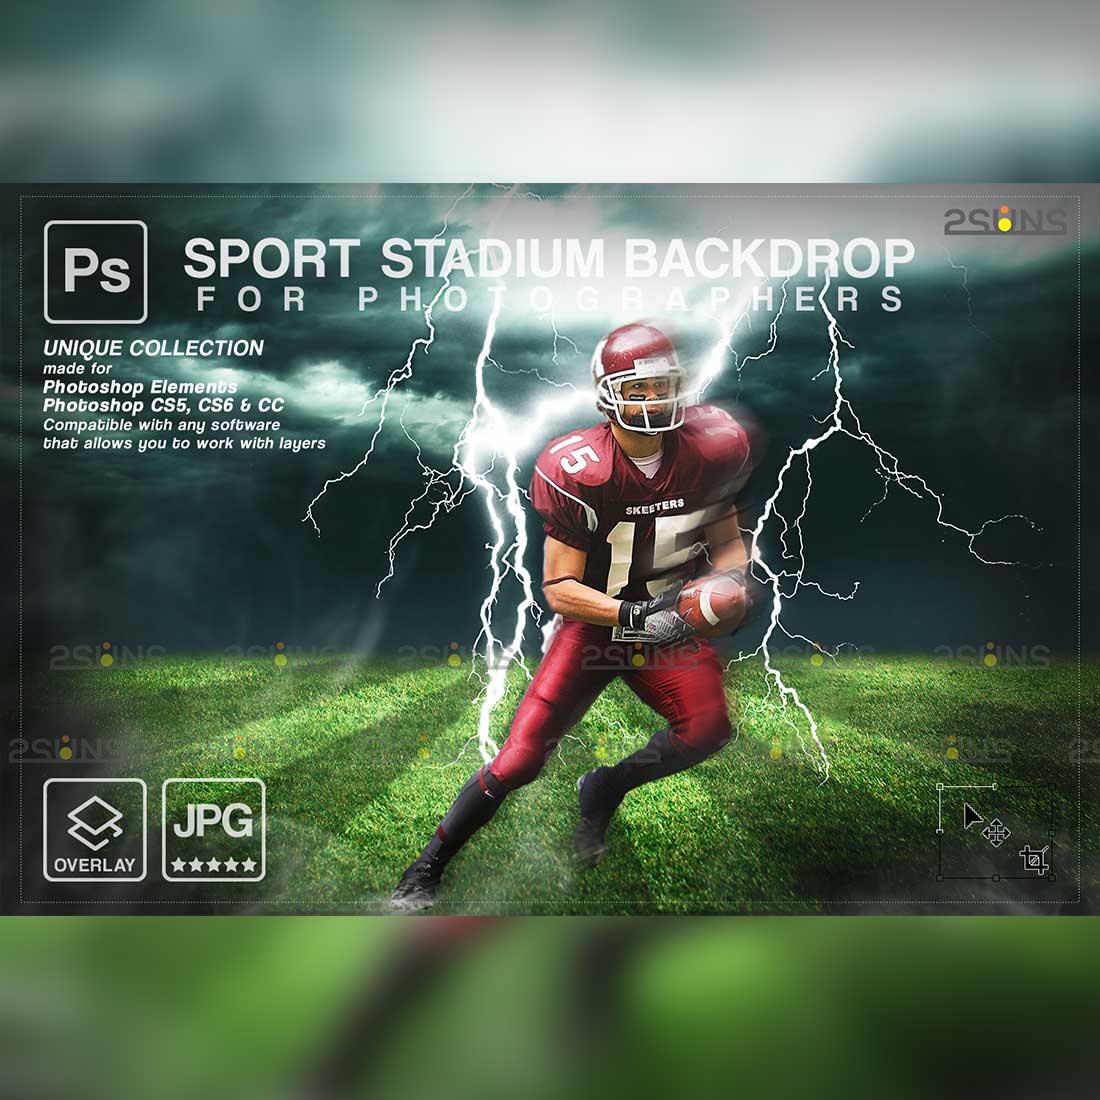 Football Backdrop Sports Digital Backdrop Photography Cover Image.